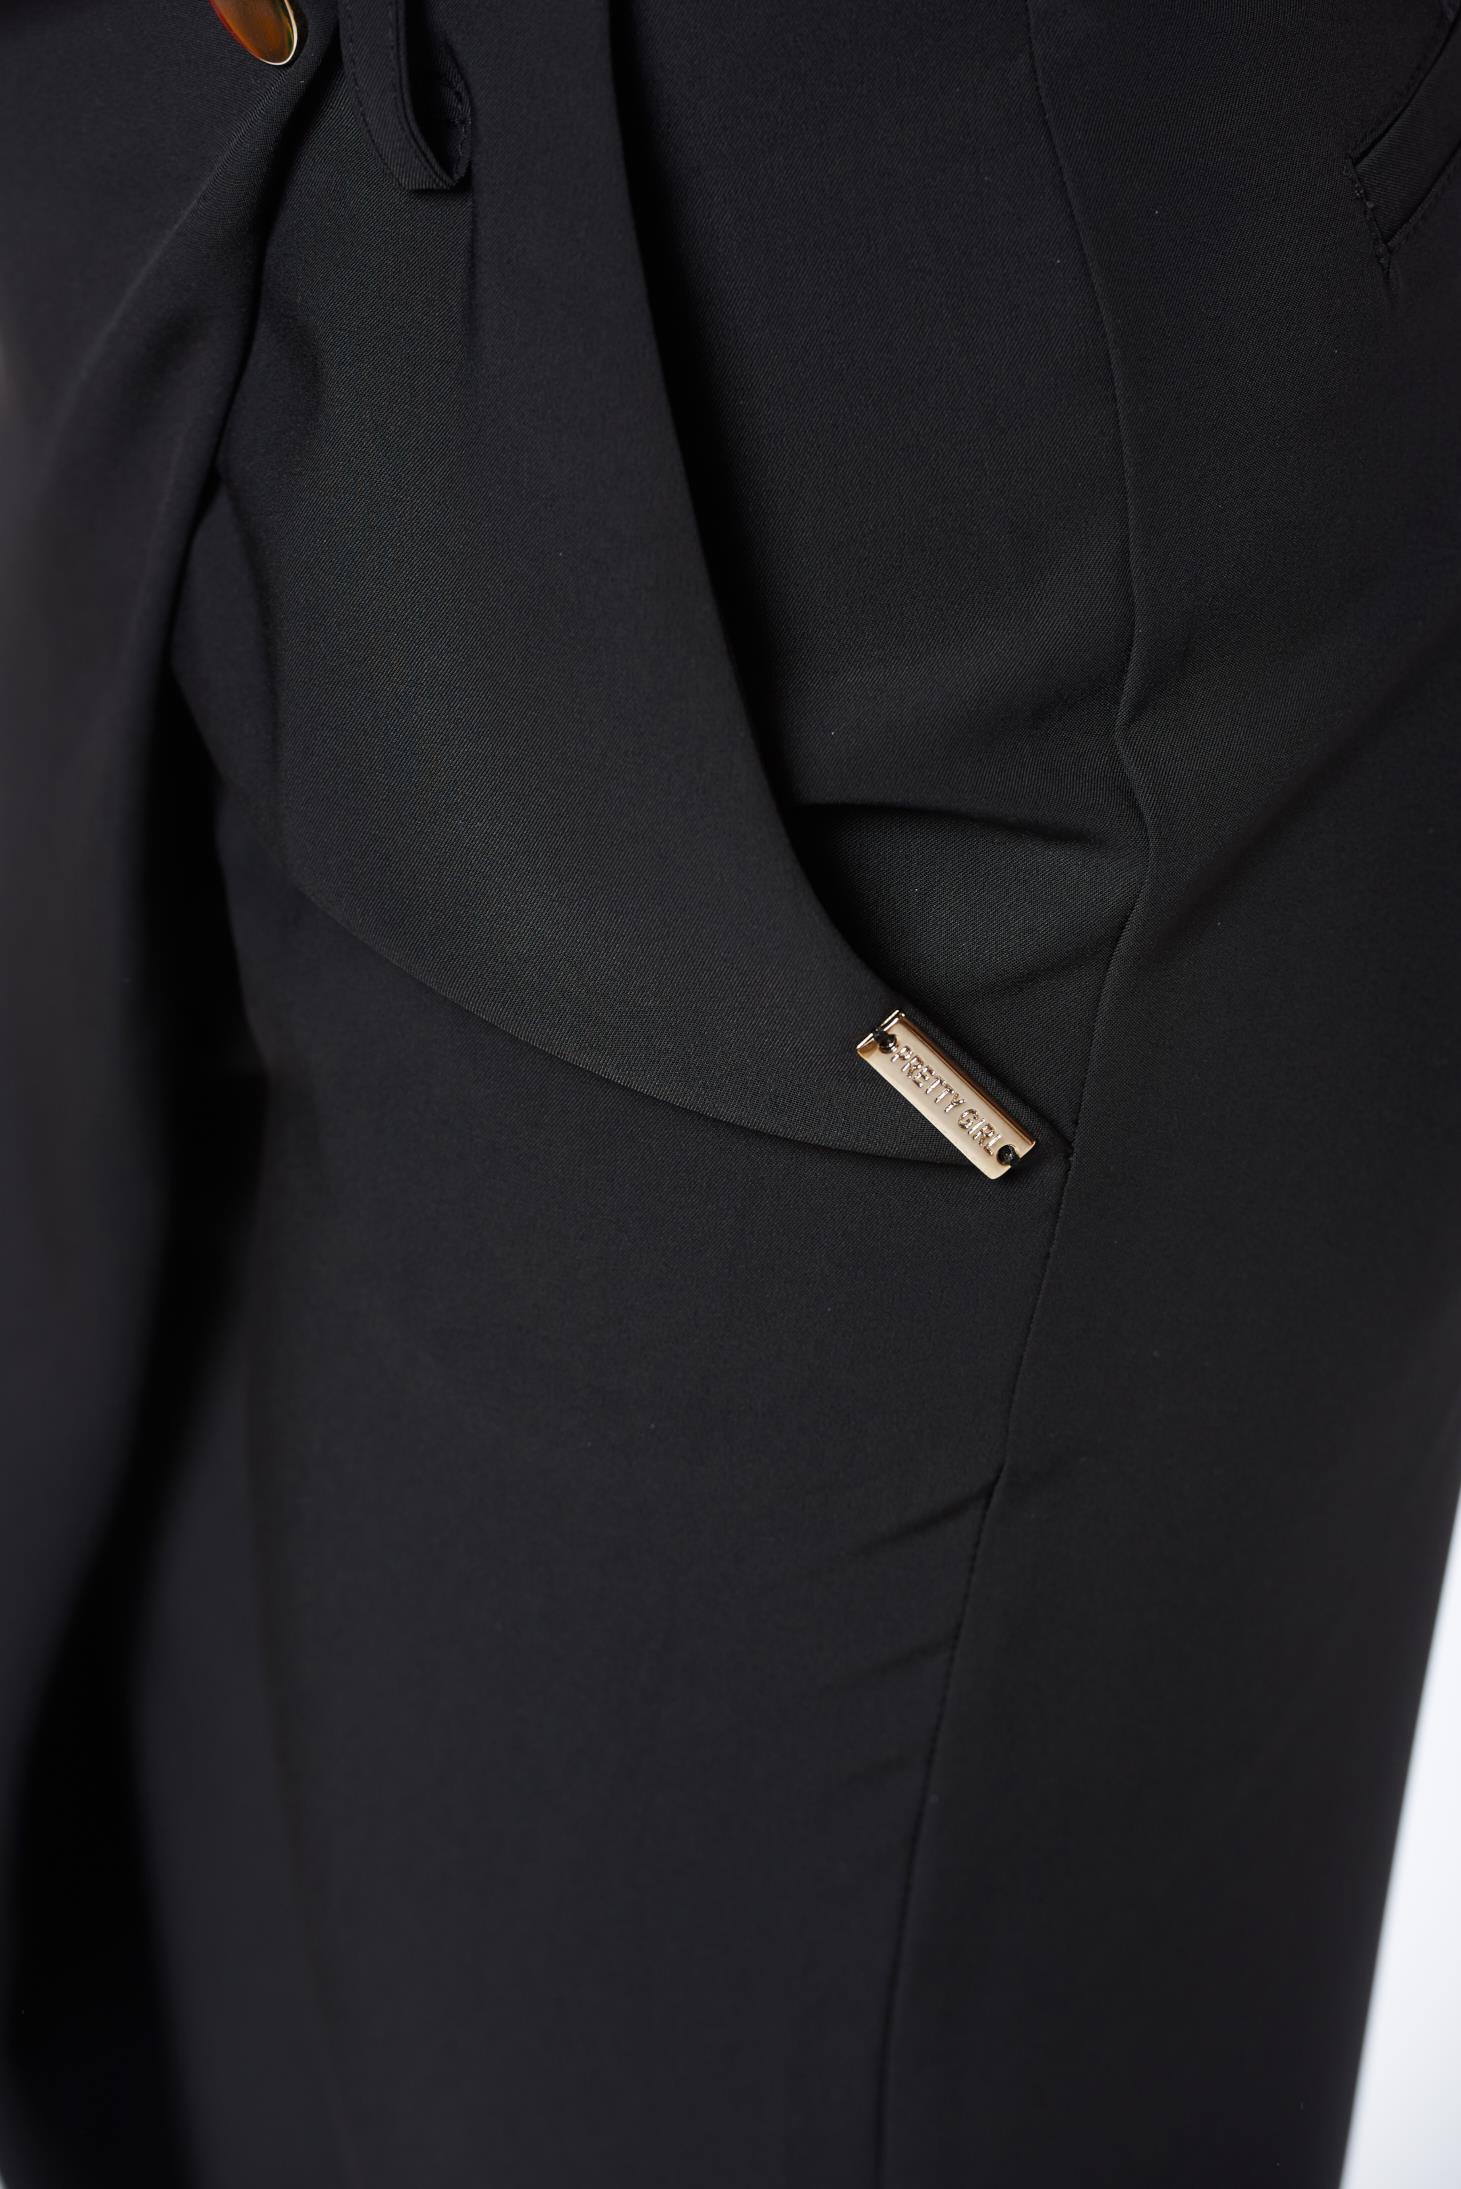 PrettyGirl black elegant trousers with medium waist airy fabric with pockets 5 - StarShinerS.com